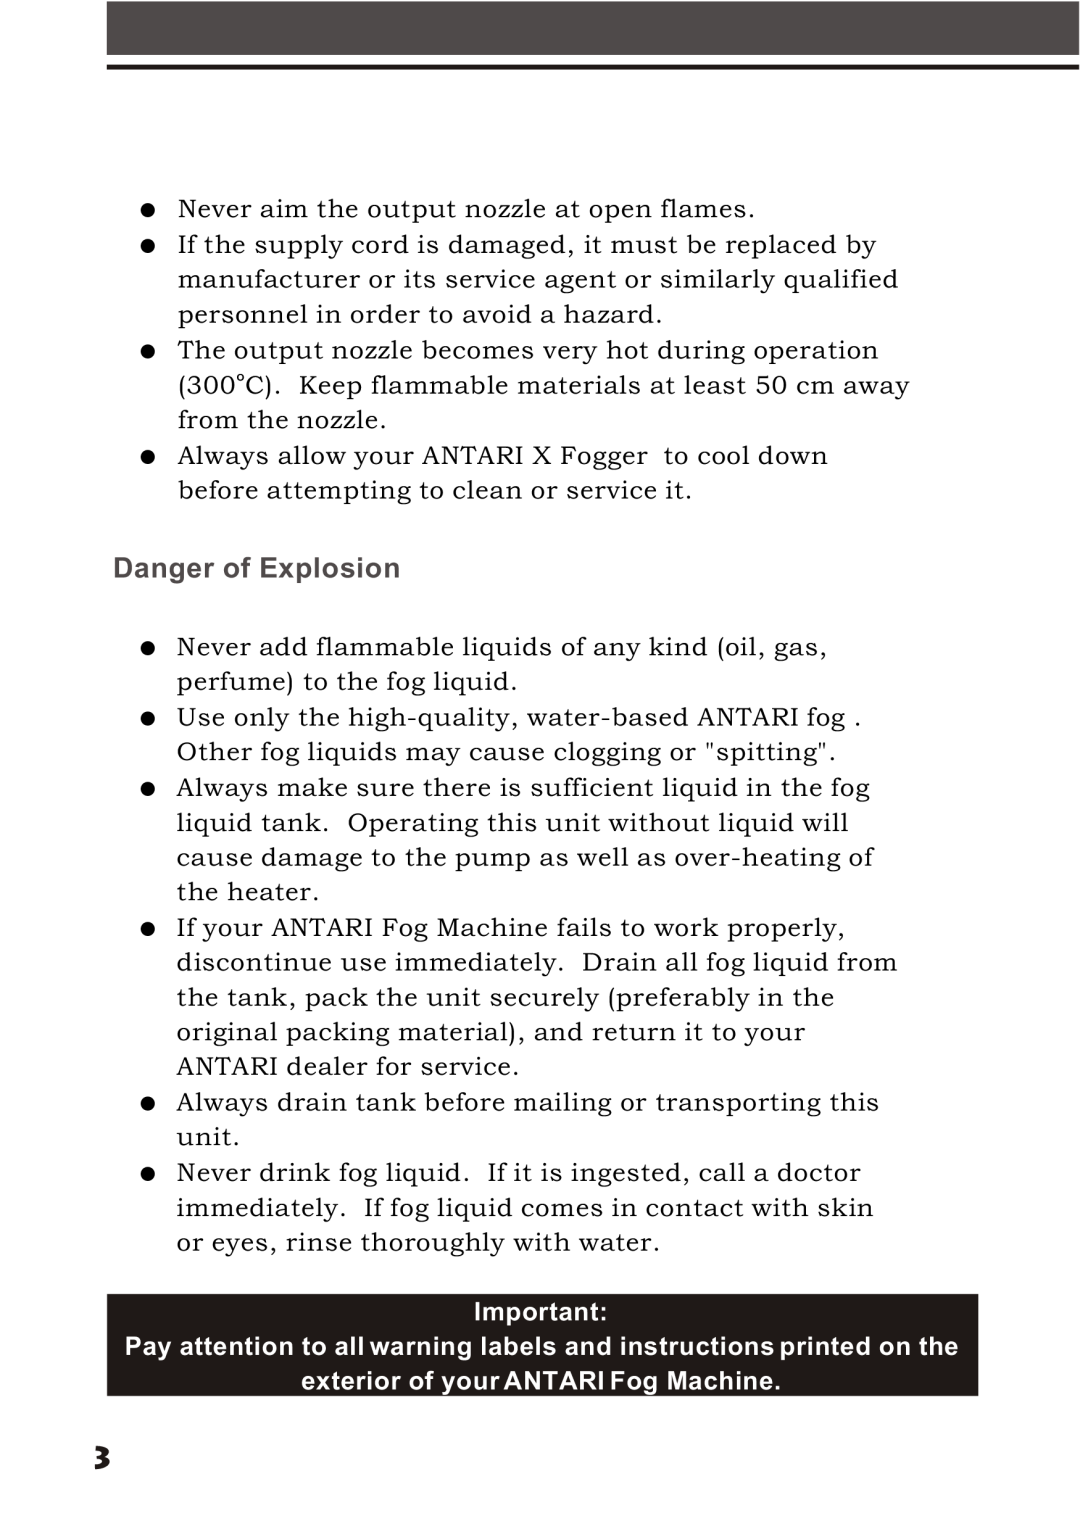 Elation Professional X-Fogger manual Danger of Explosion, exterior of your ANTARI Fog Machine 